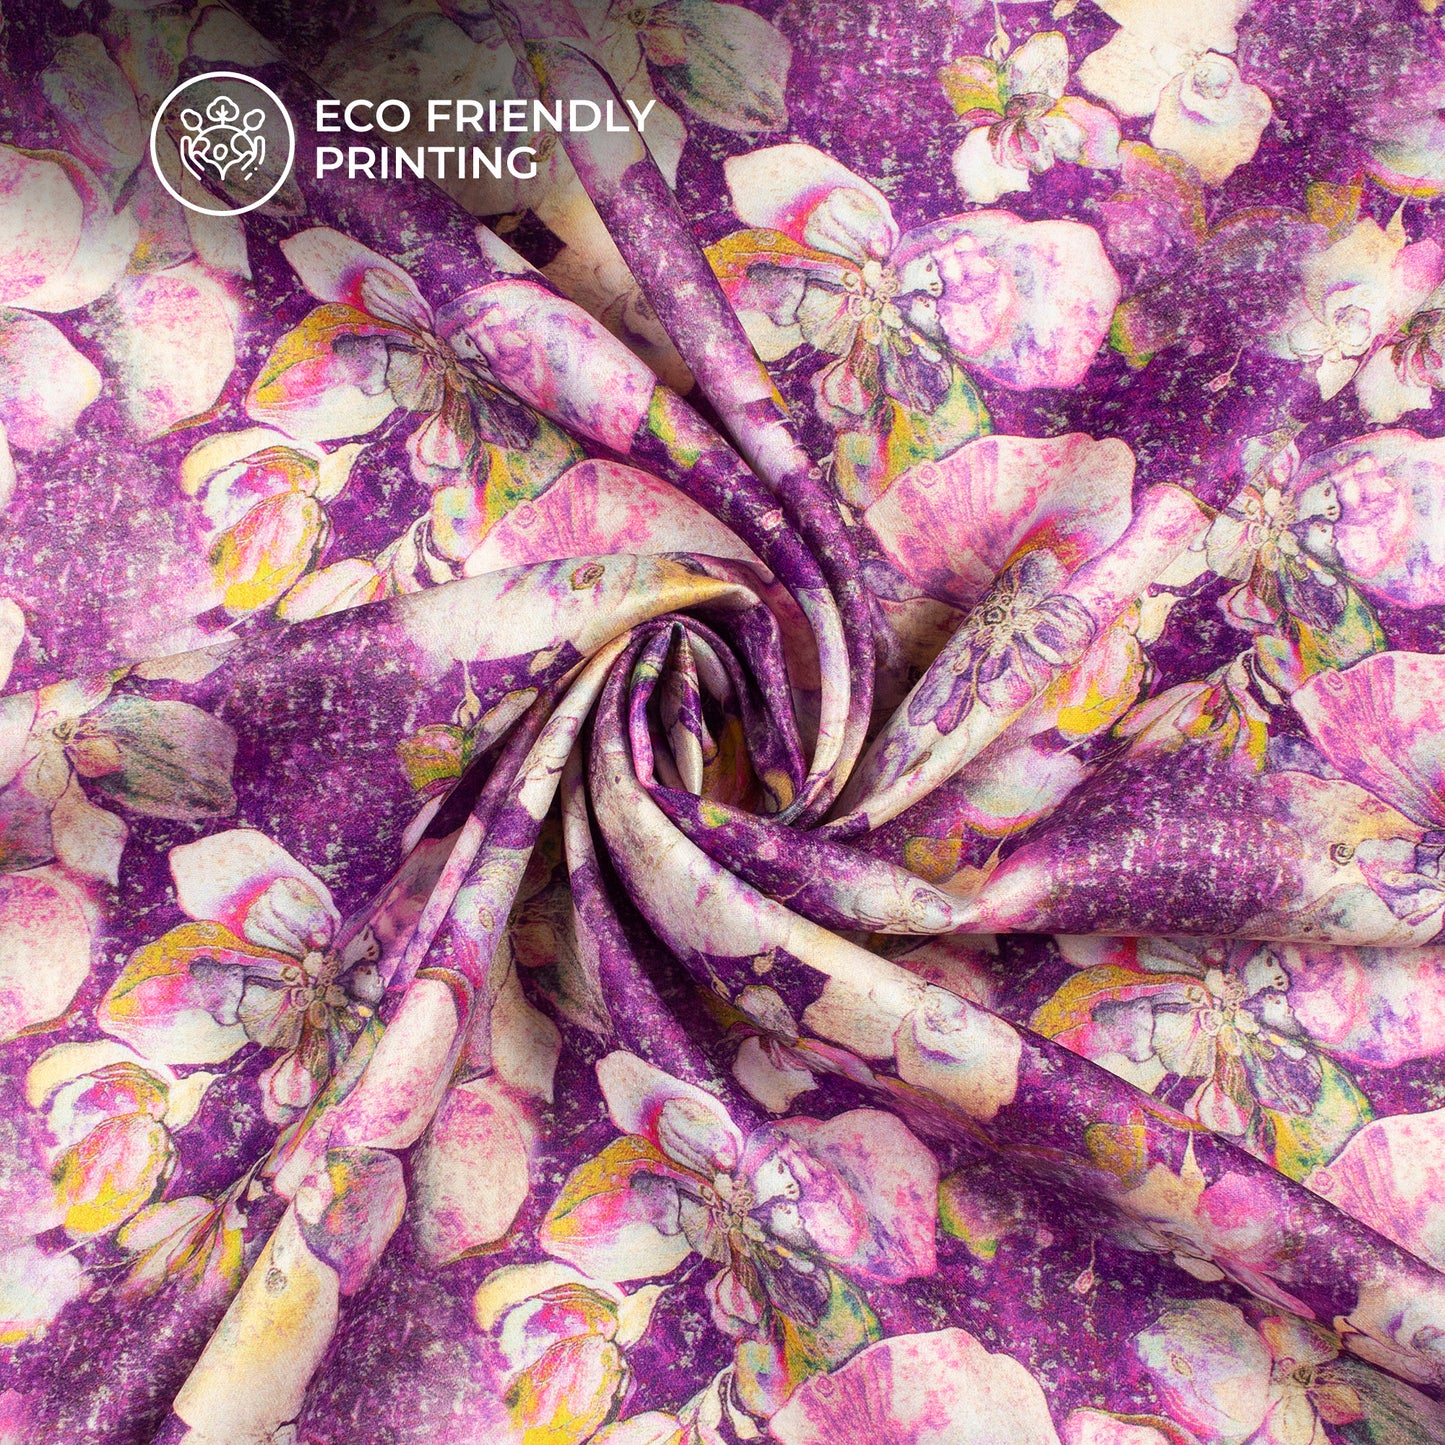 Stylish Floral Digital Print Lush Satin Fabric